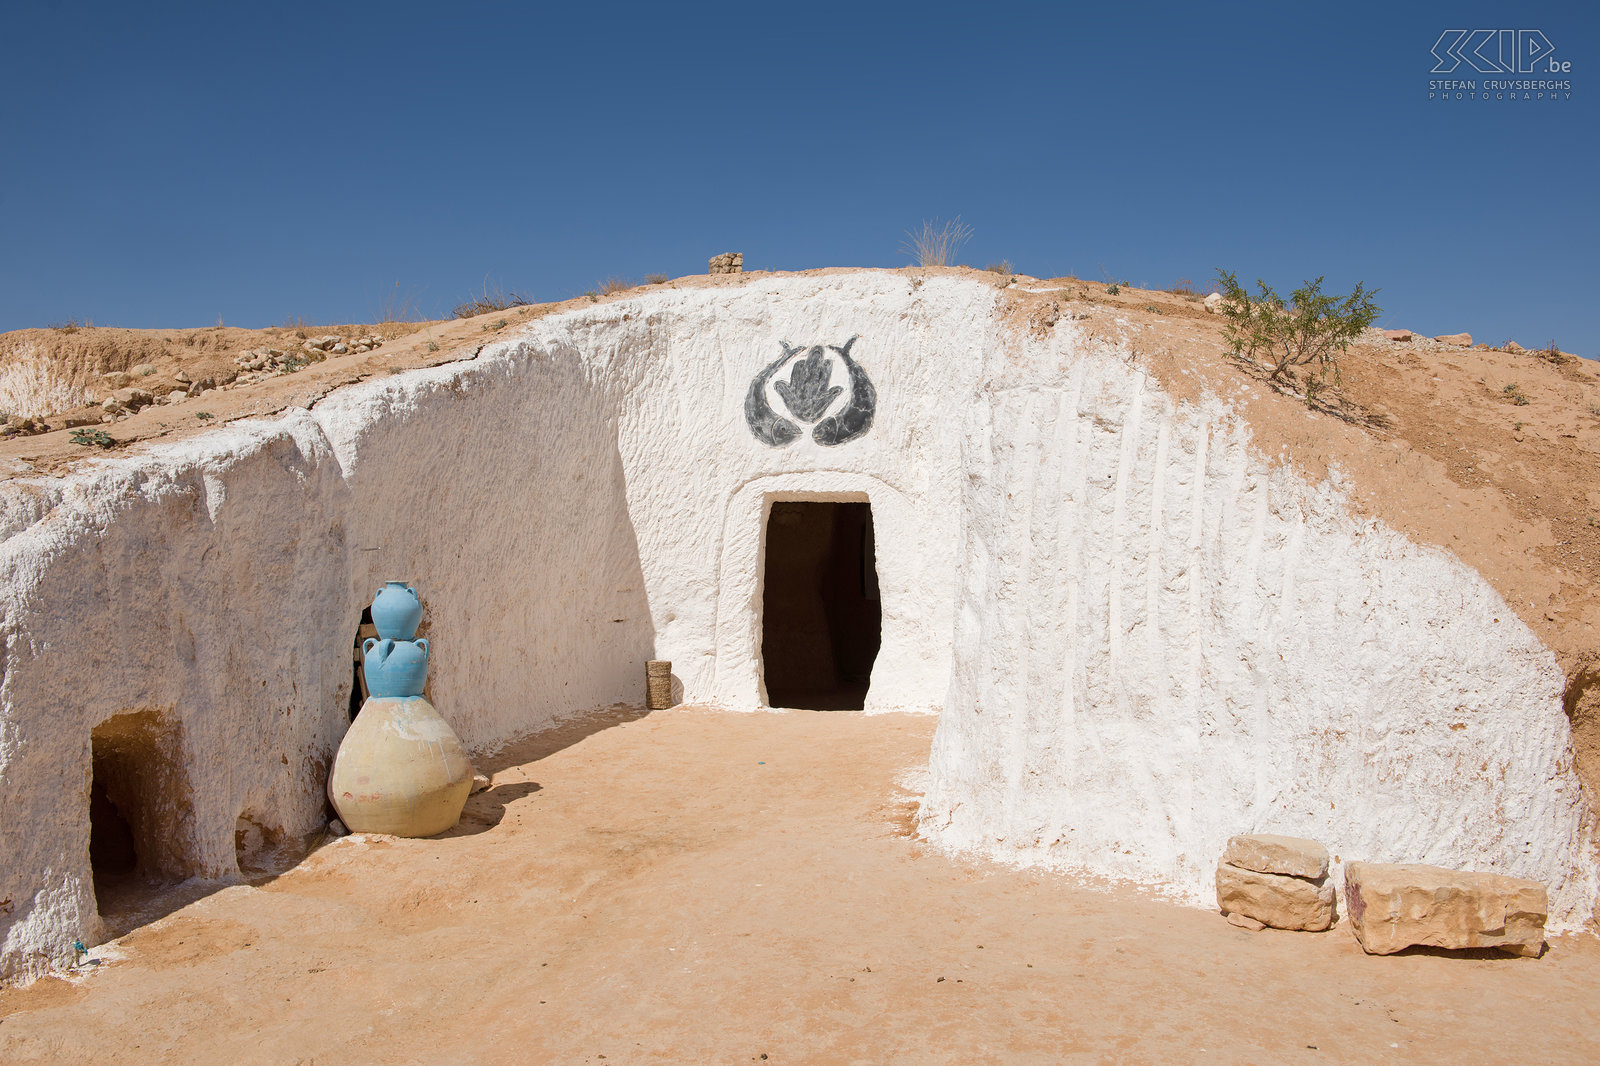 Matmata Matmata of Metmata is een kleine Berber stadje dat bekend is omwille van de traditionele ondergrondse 'troglodyte' woningen. Stefan Cruysberghs